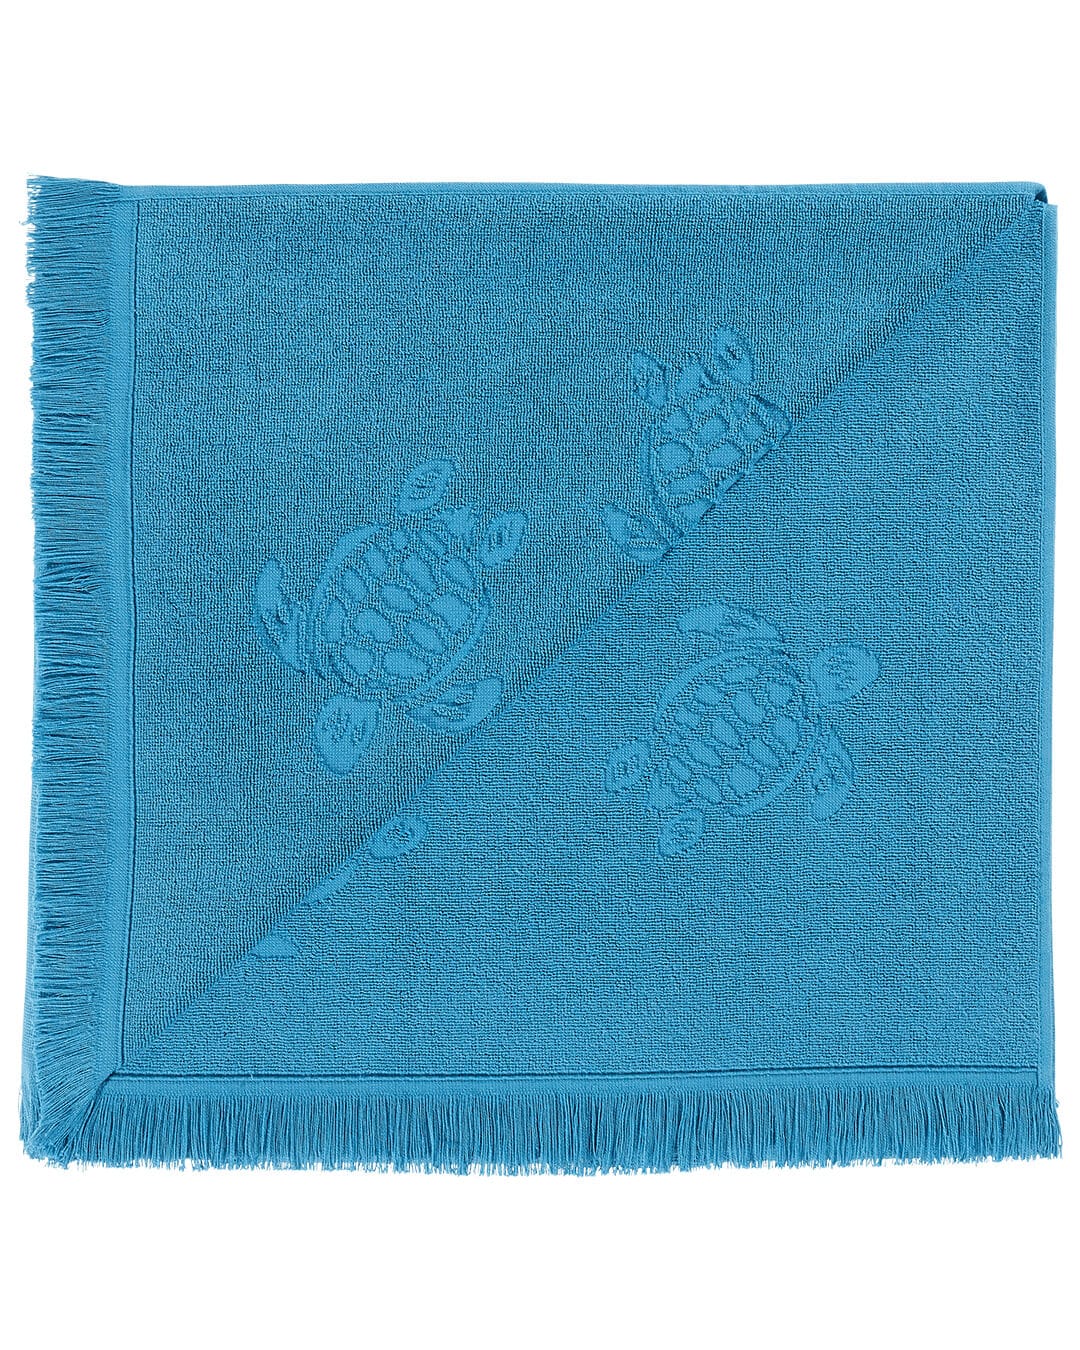 Vilebrequin Towel One Size Vilebrequin Organic Cotton Blue Beach Towel Turtles Jacquard